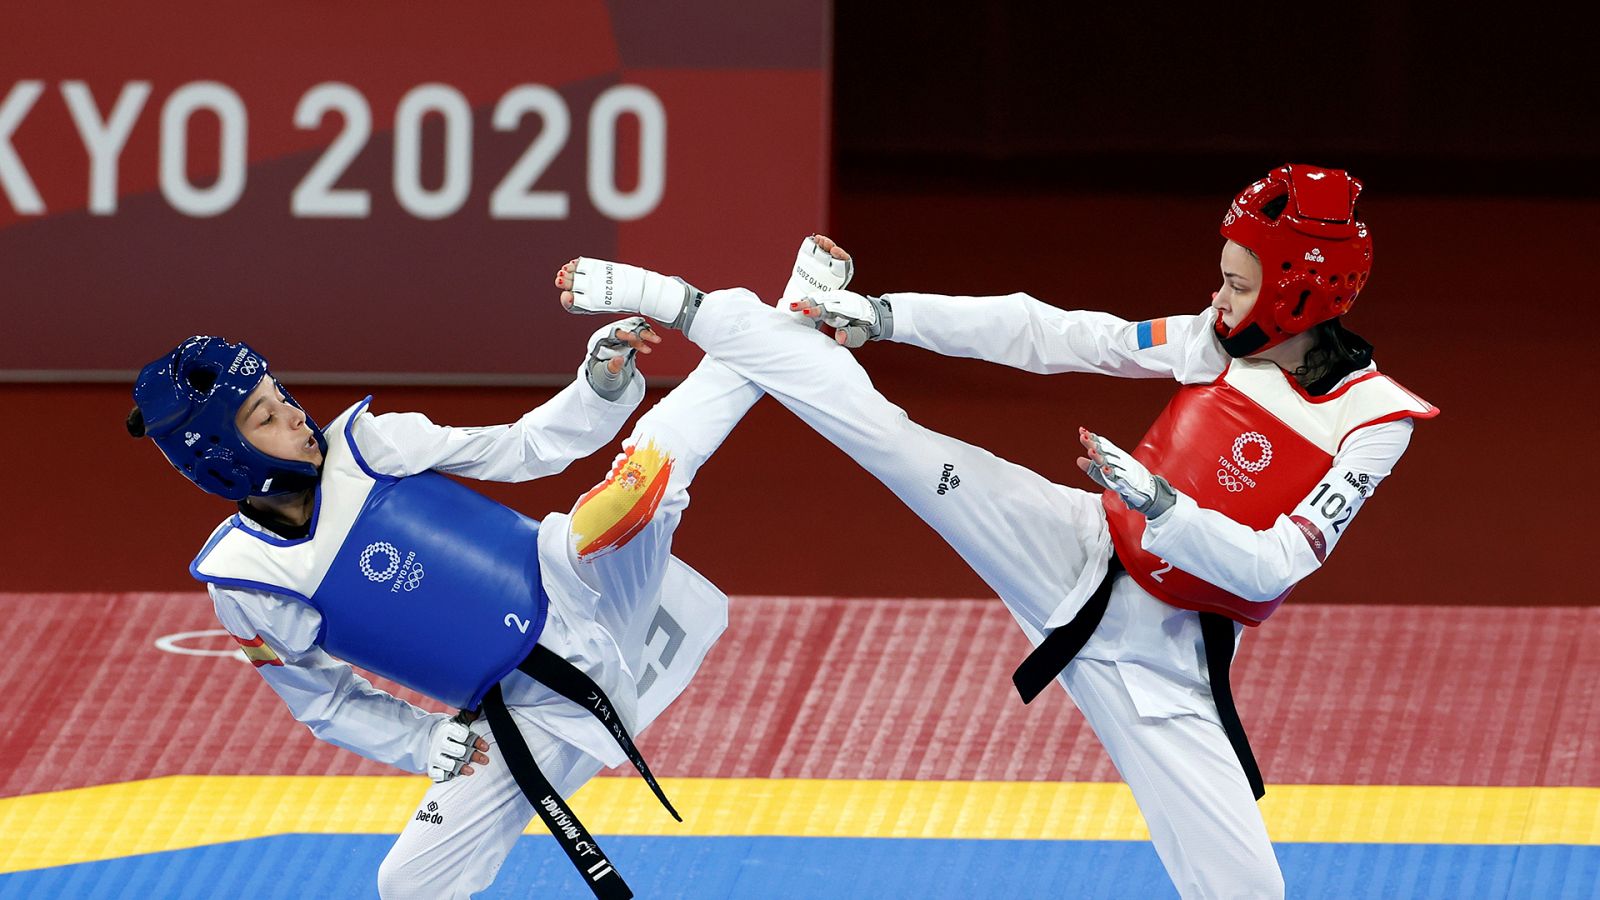 Taekwondo: Clasificación femenina Octavos de final. Juegos Olímpicos de Tokio 2020